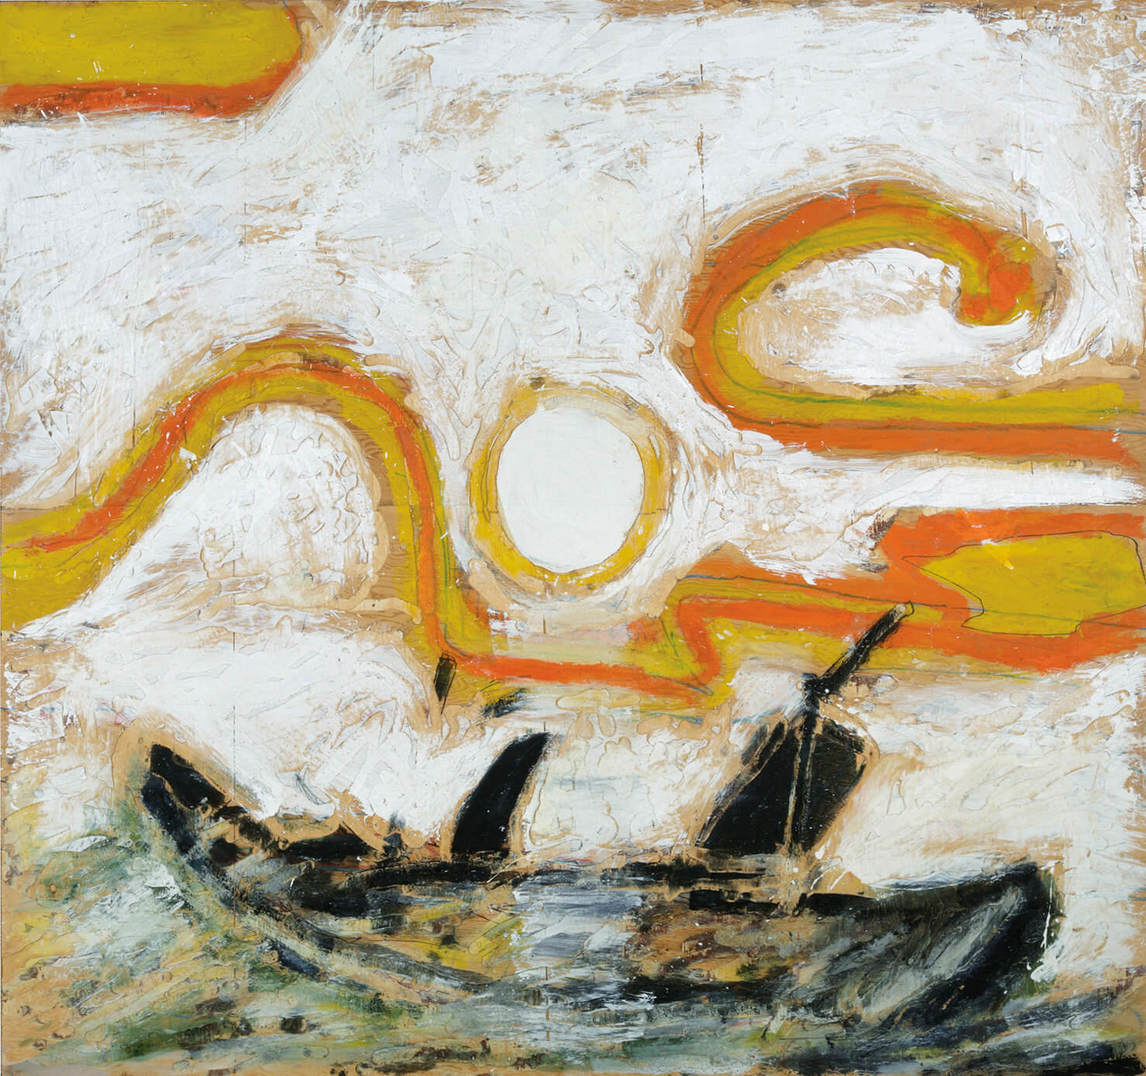 Paterson Ewen, Ship Wreck (Naufrage), 1987